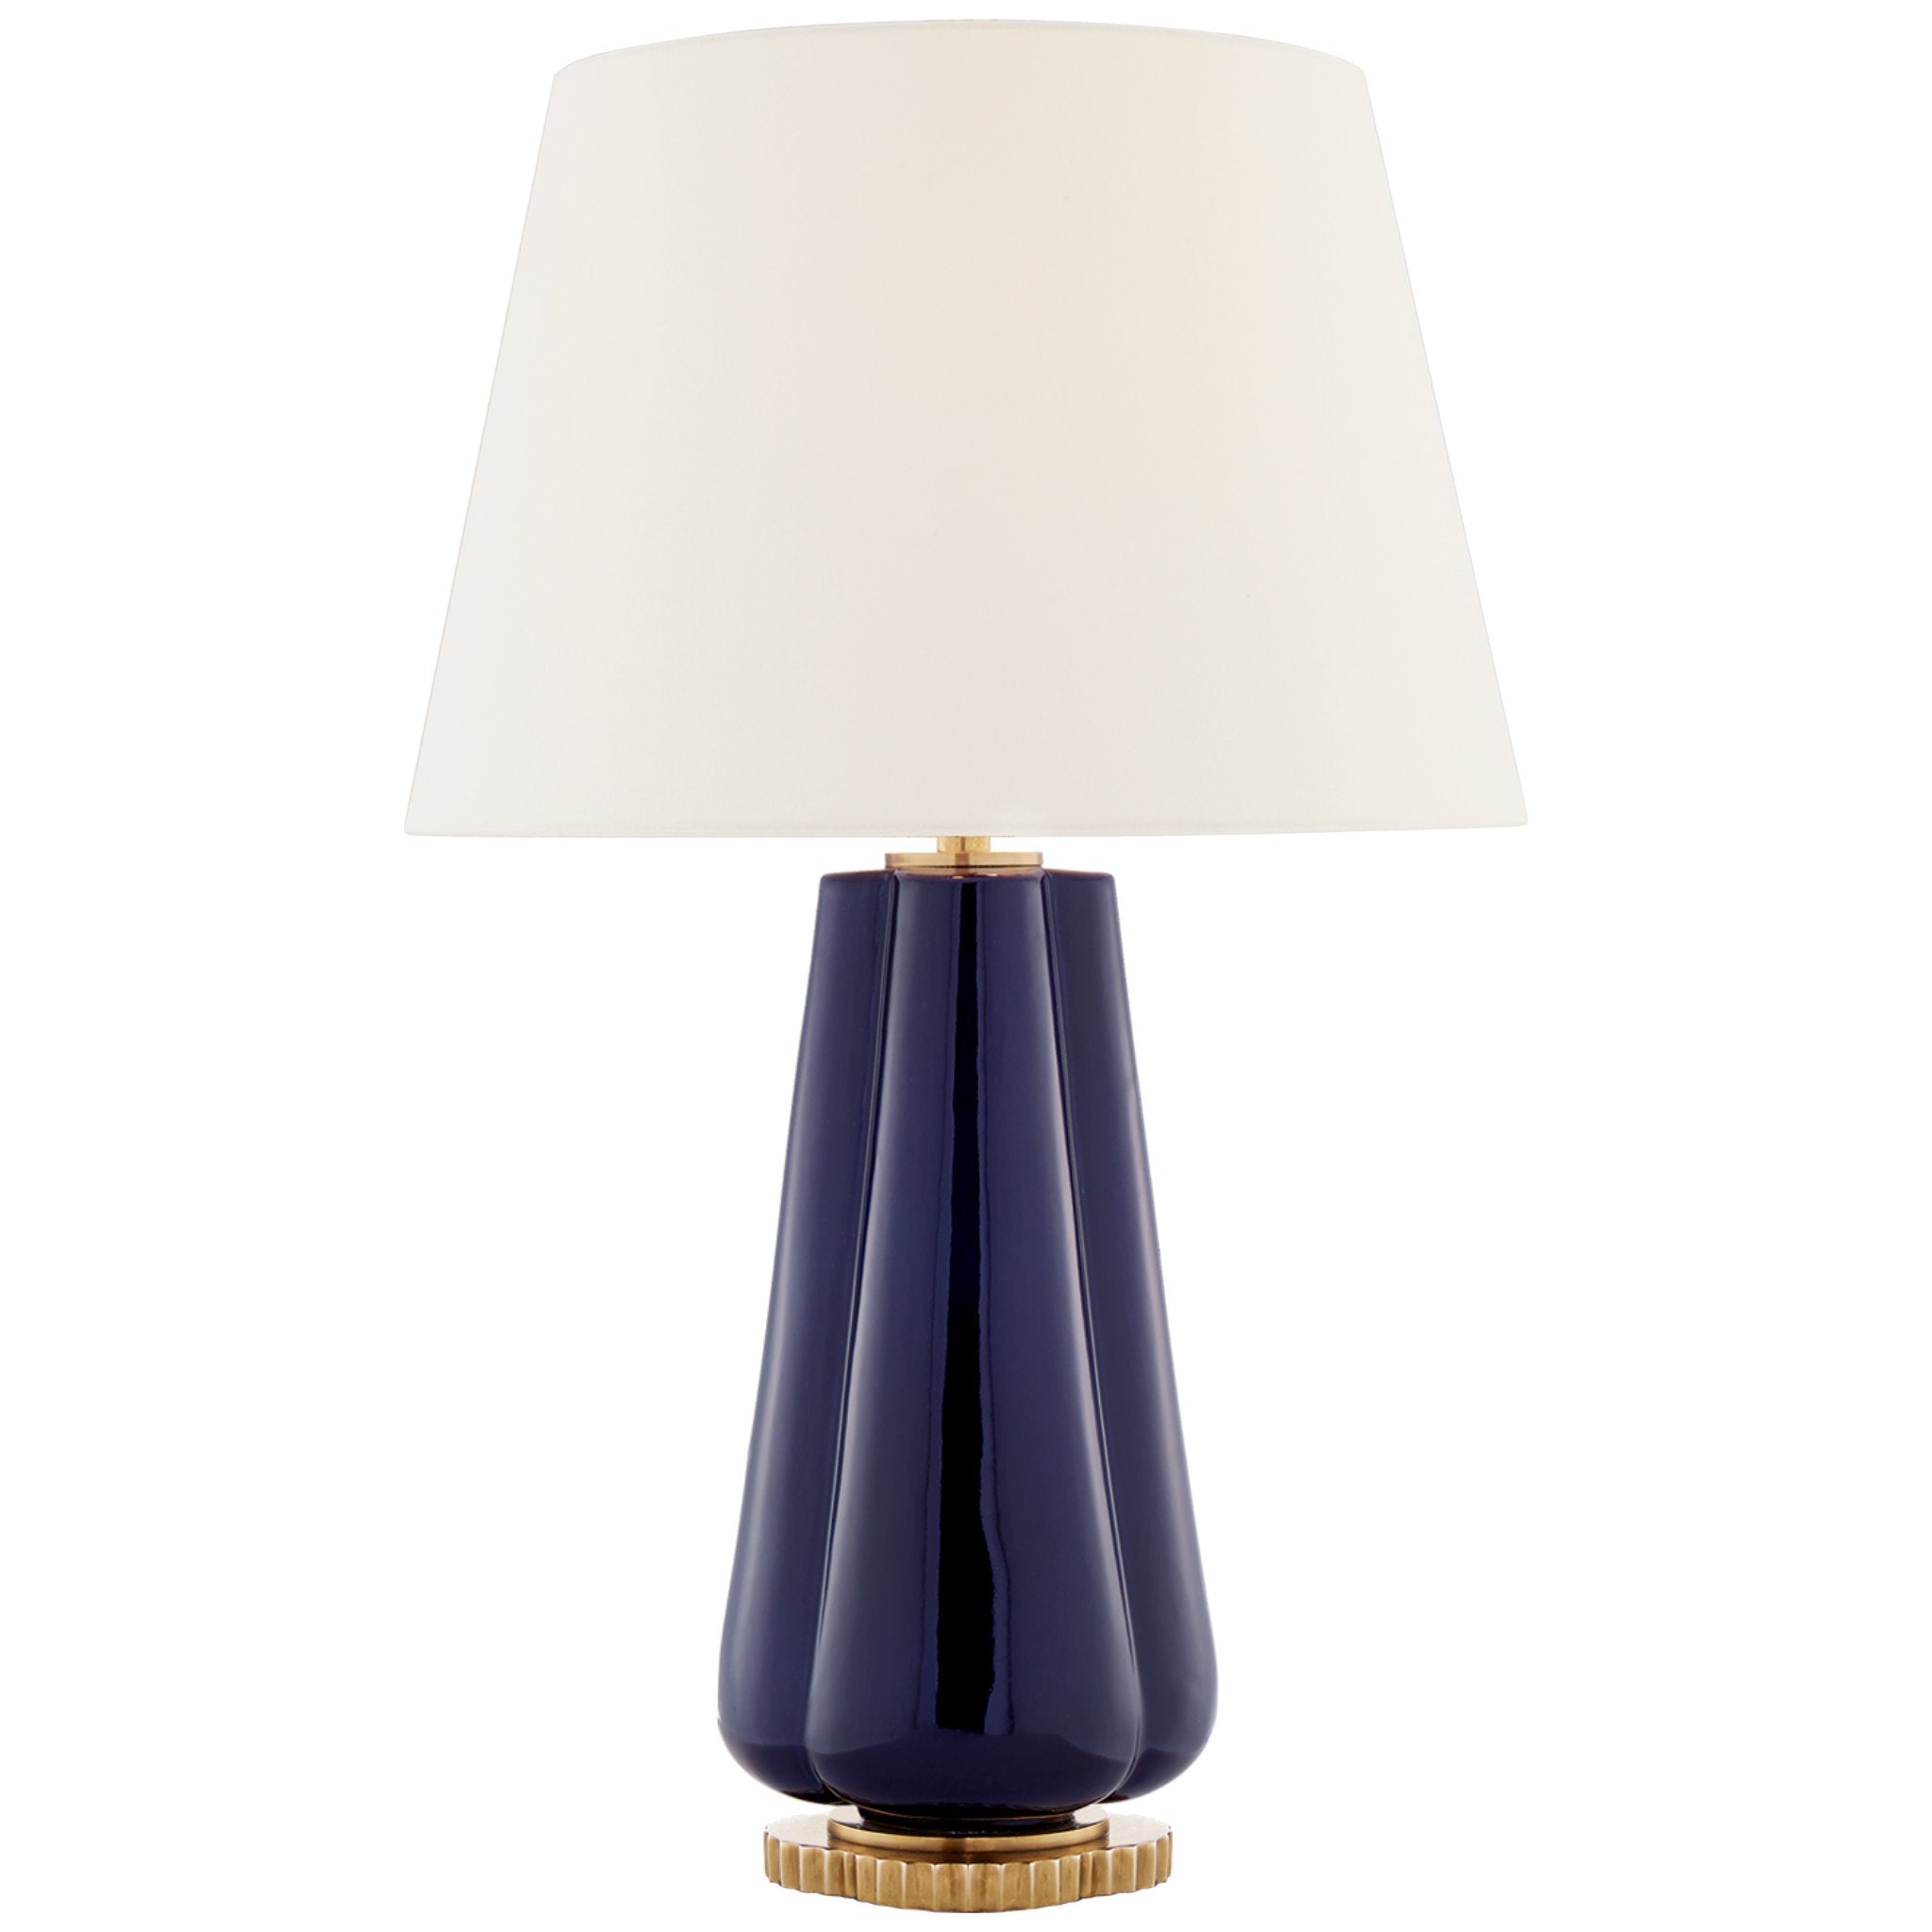 Alexa Hampton Penelope Table Lamp in Denim with Linen Shade